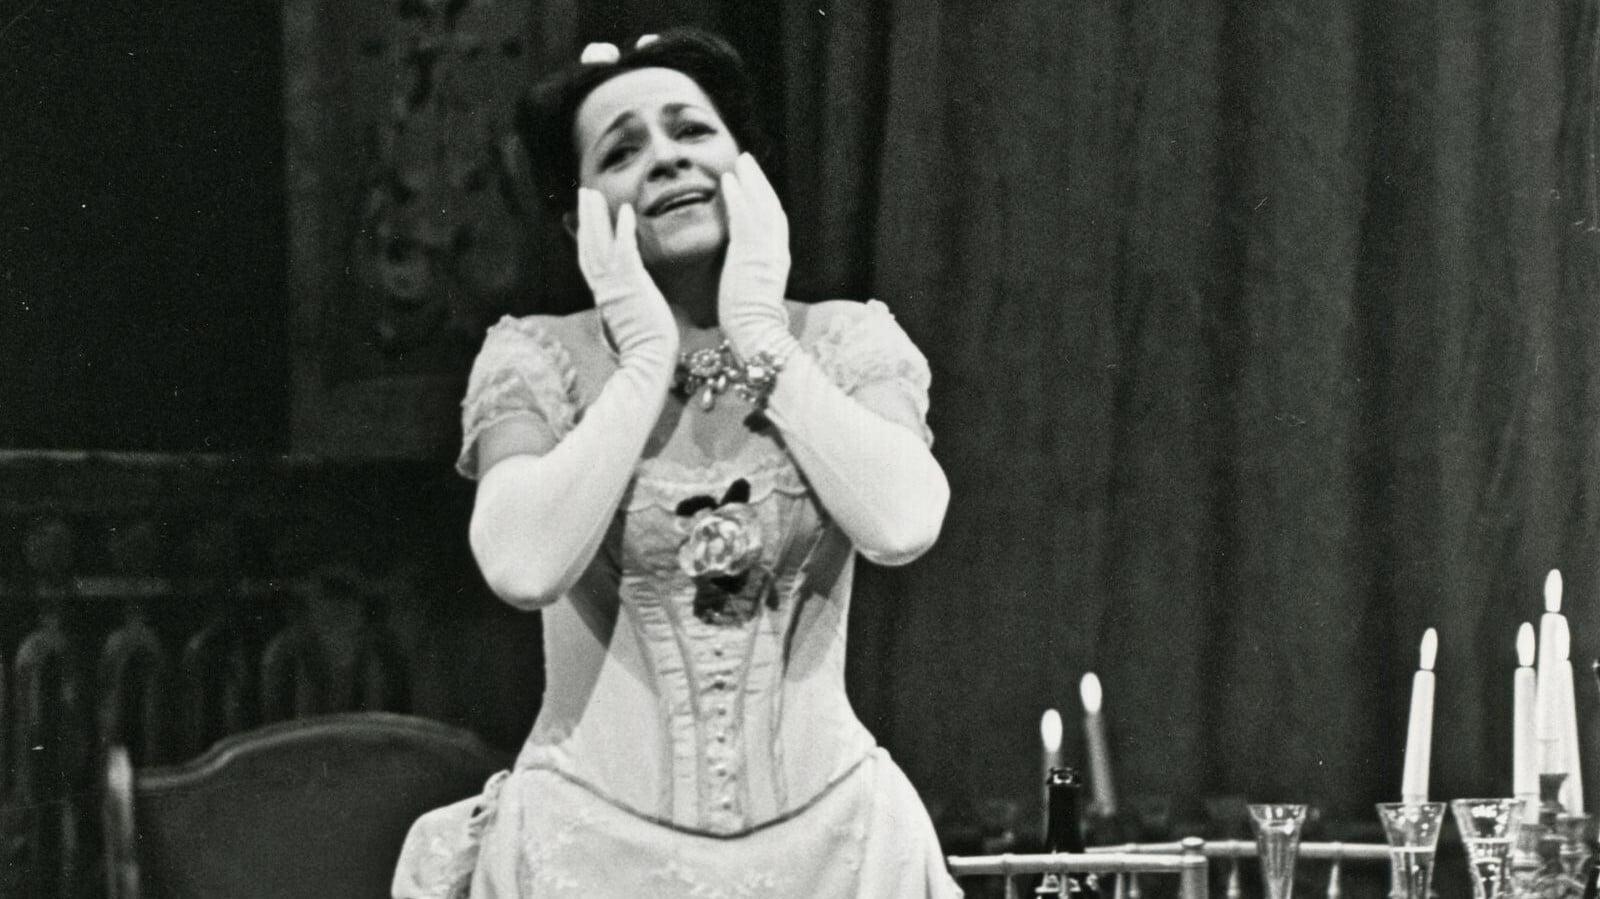 La Traviata - The Met backdrop